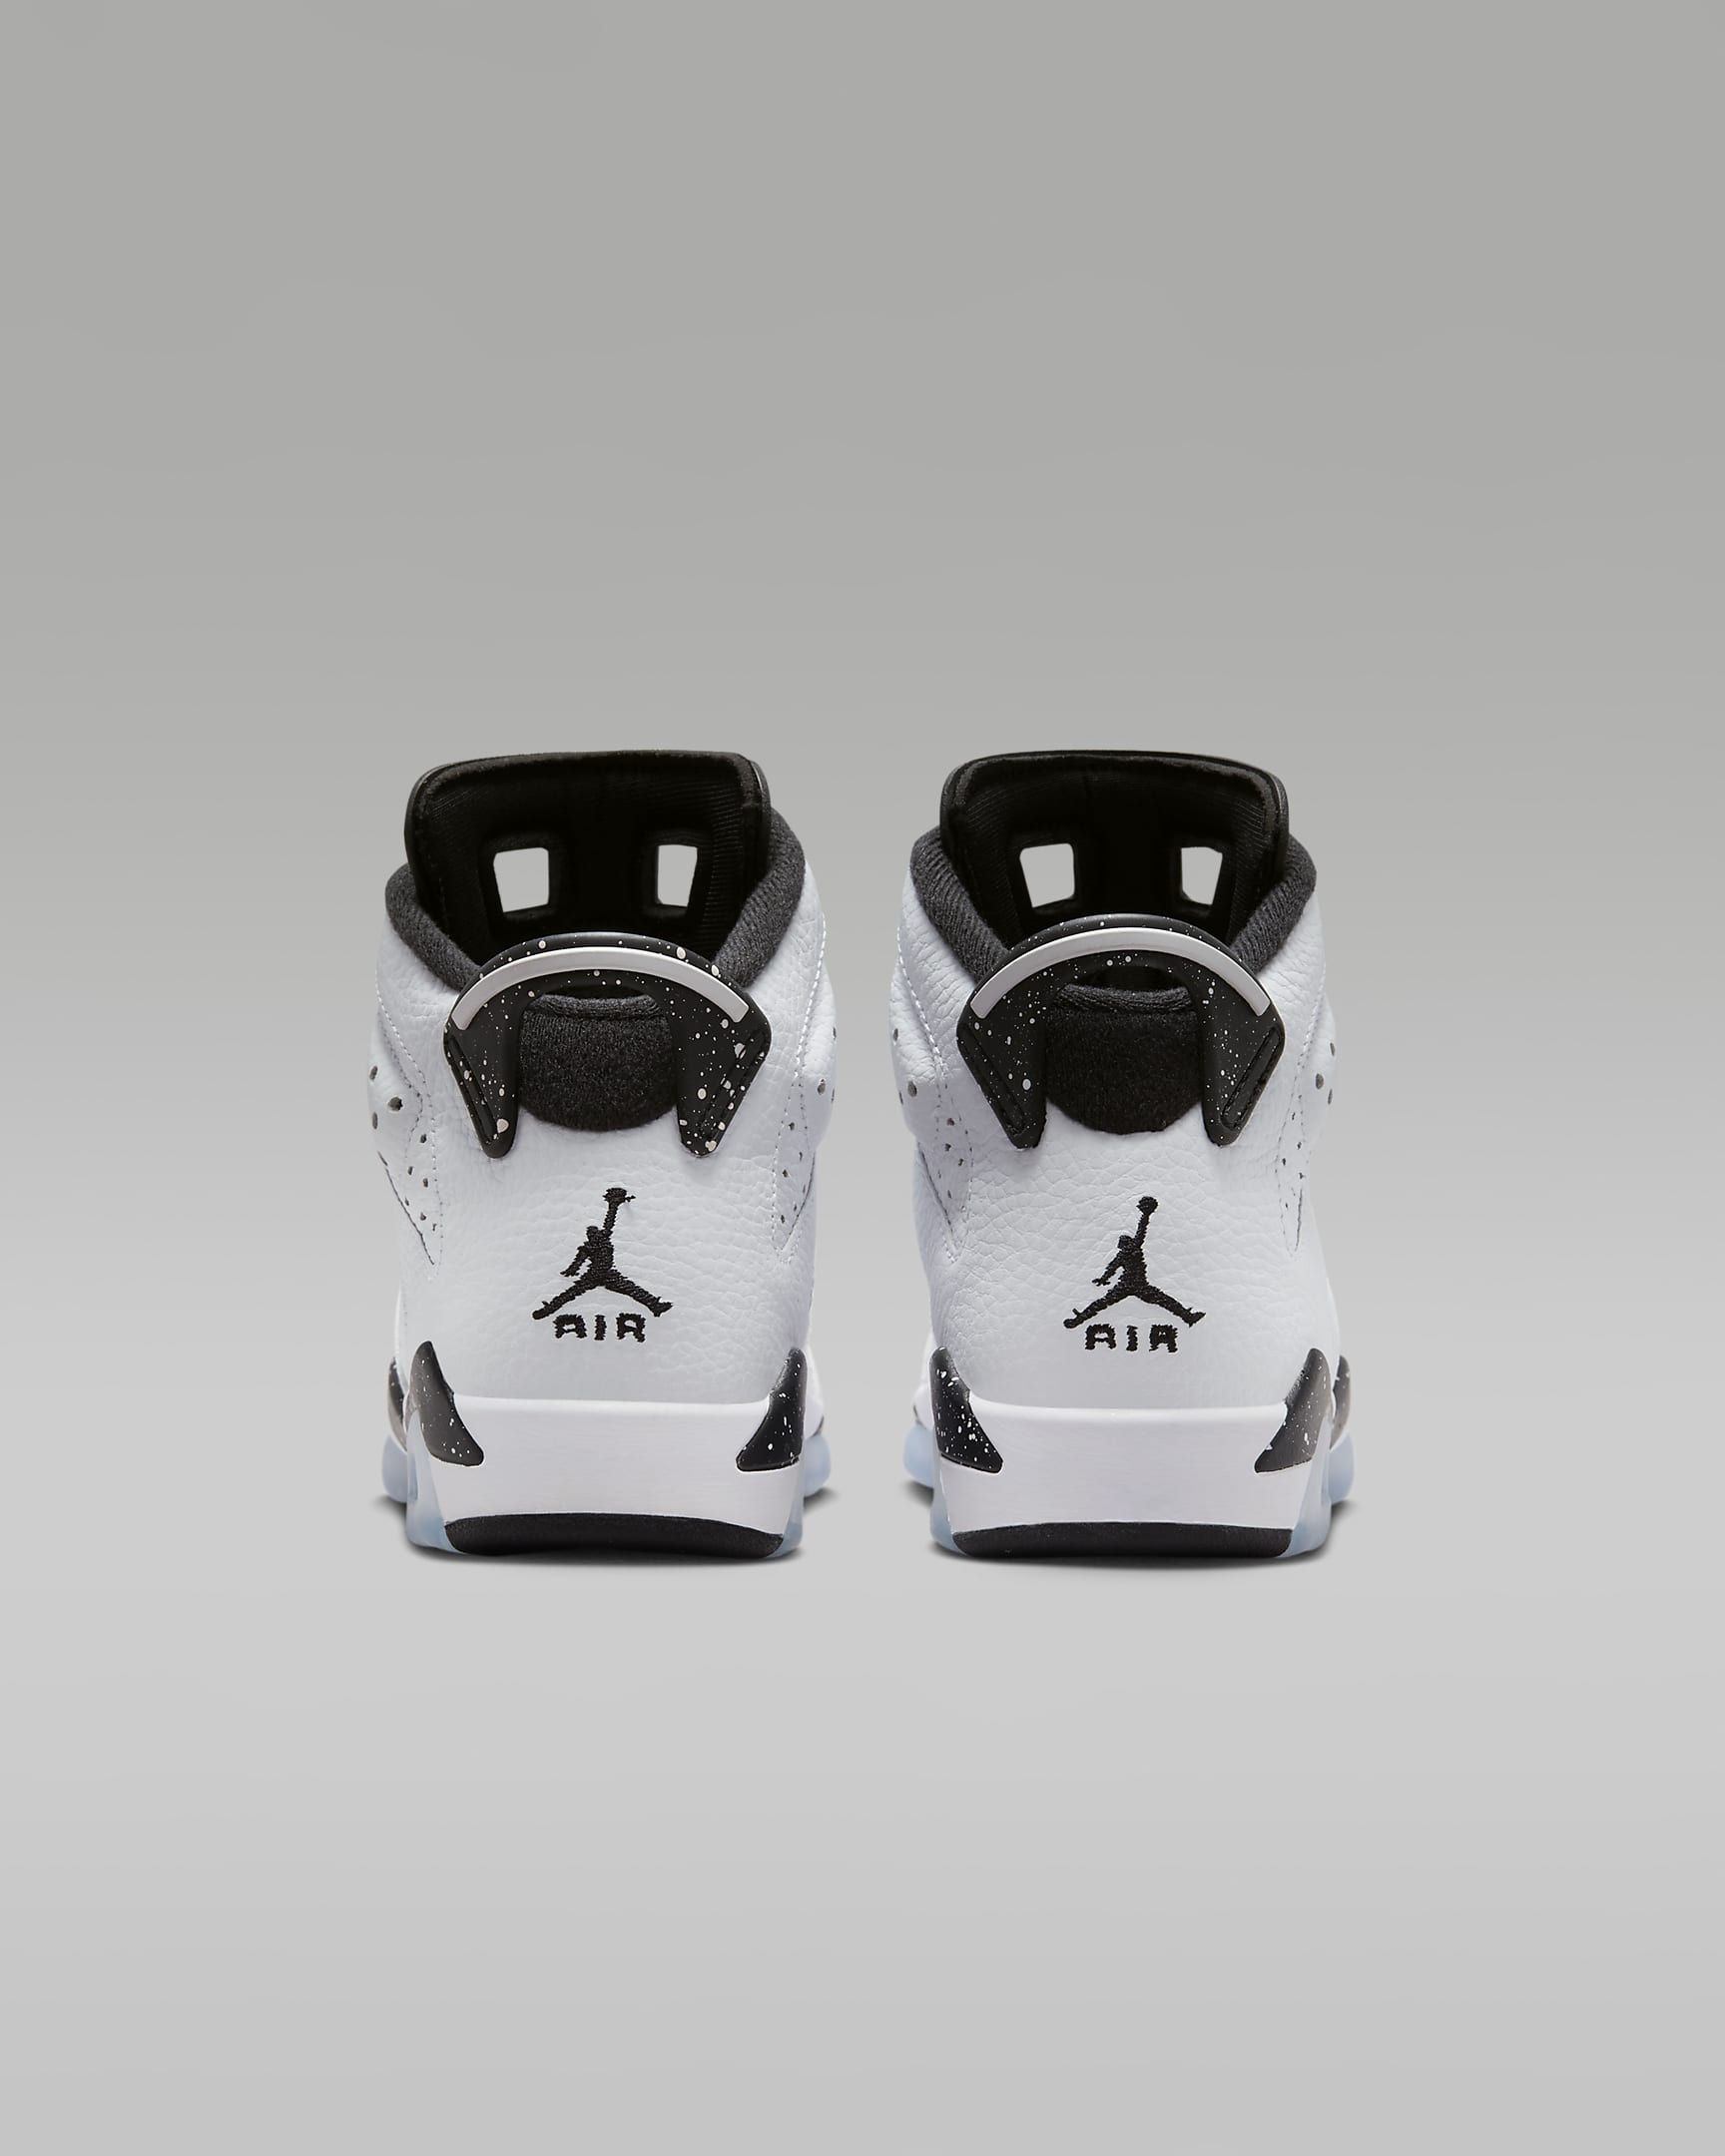 Air Jordan 6 Retro "White/Black"